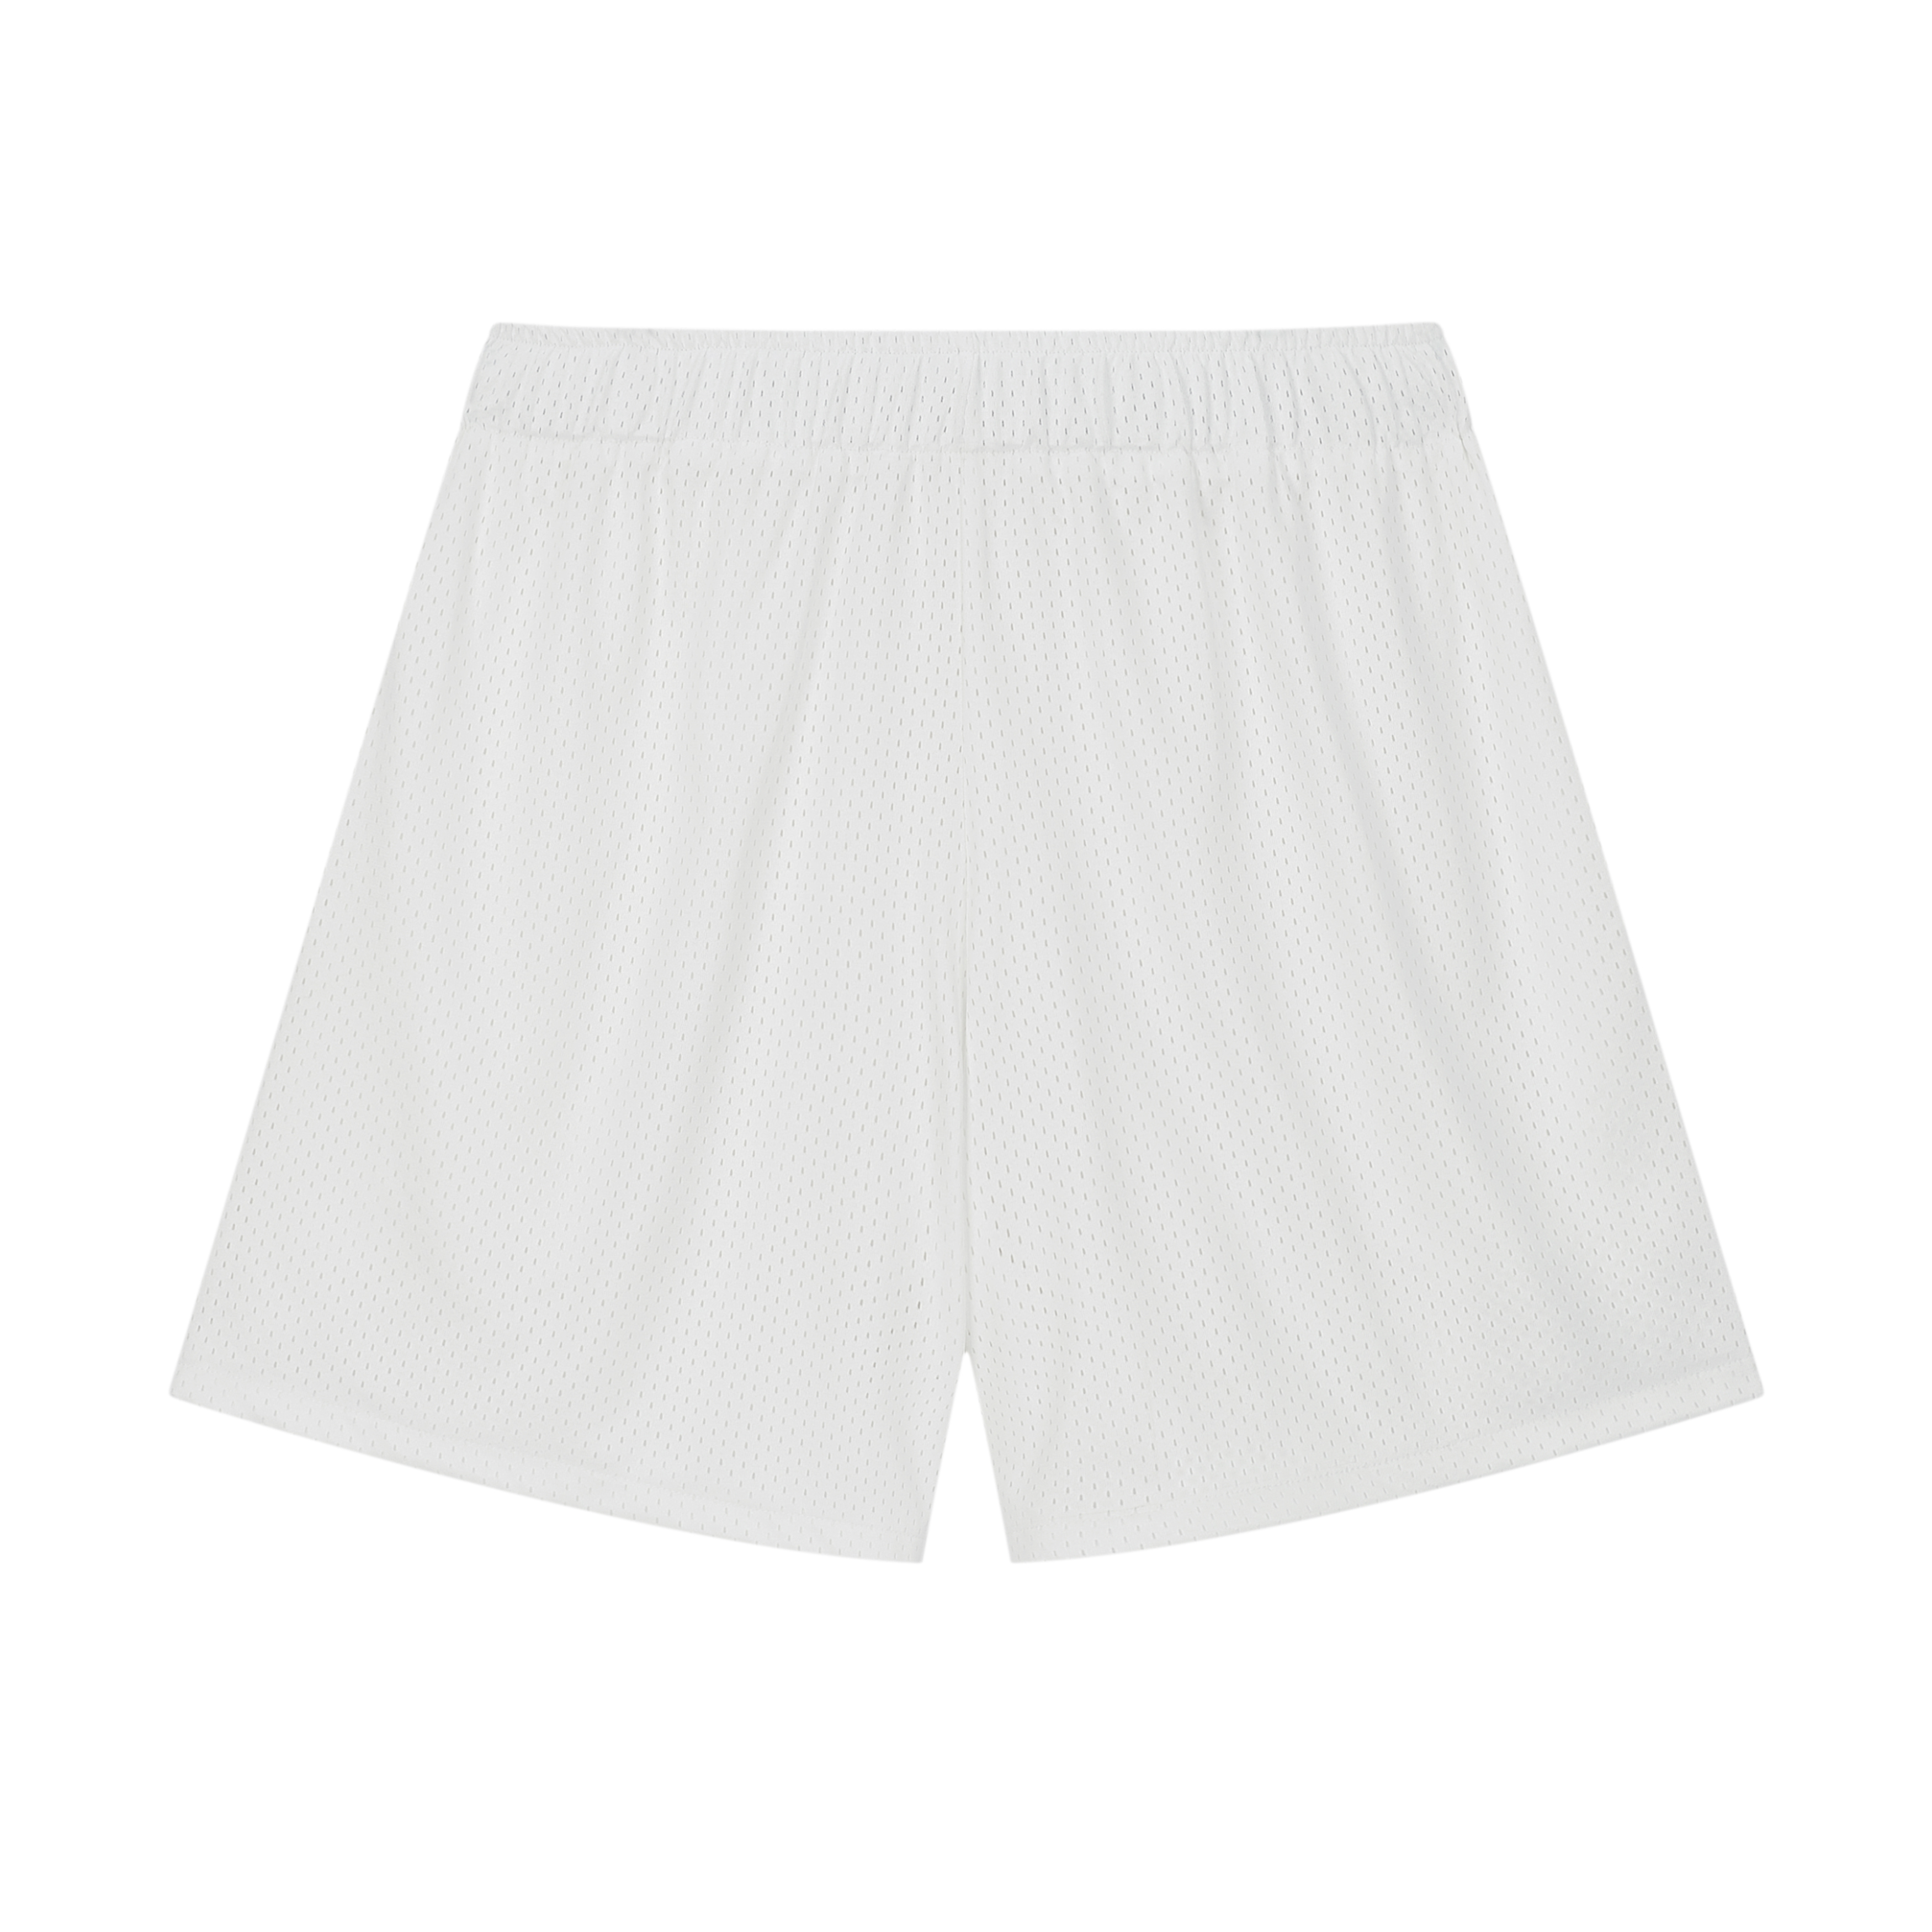 All-Over Print Streetwear EE Basic Shorts - Print On Demand-3